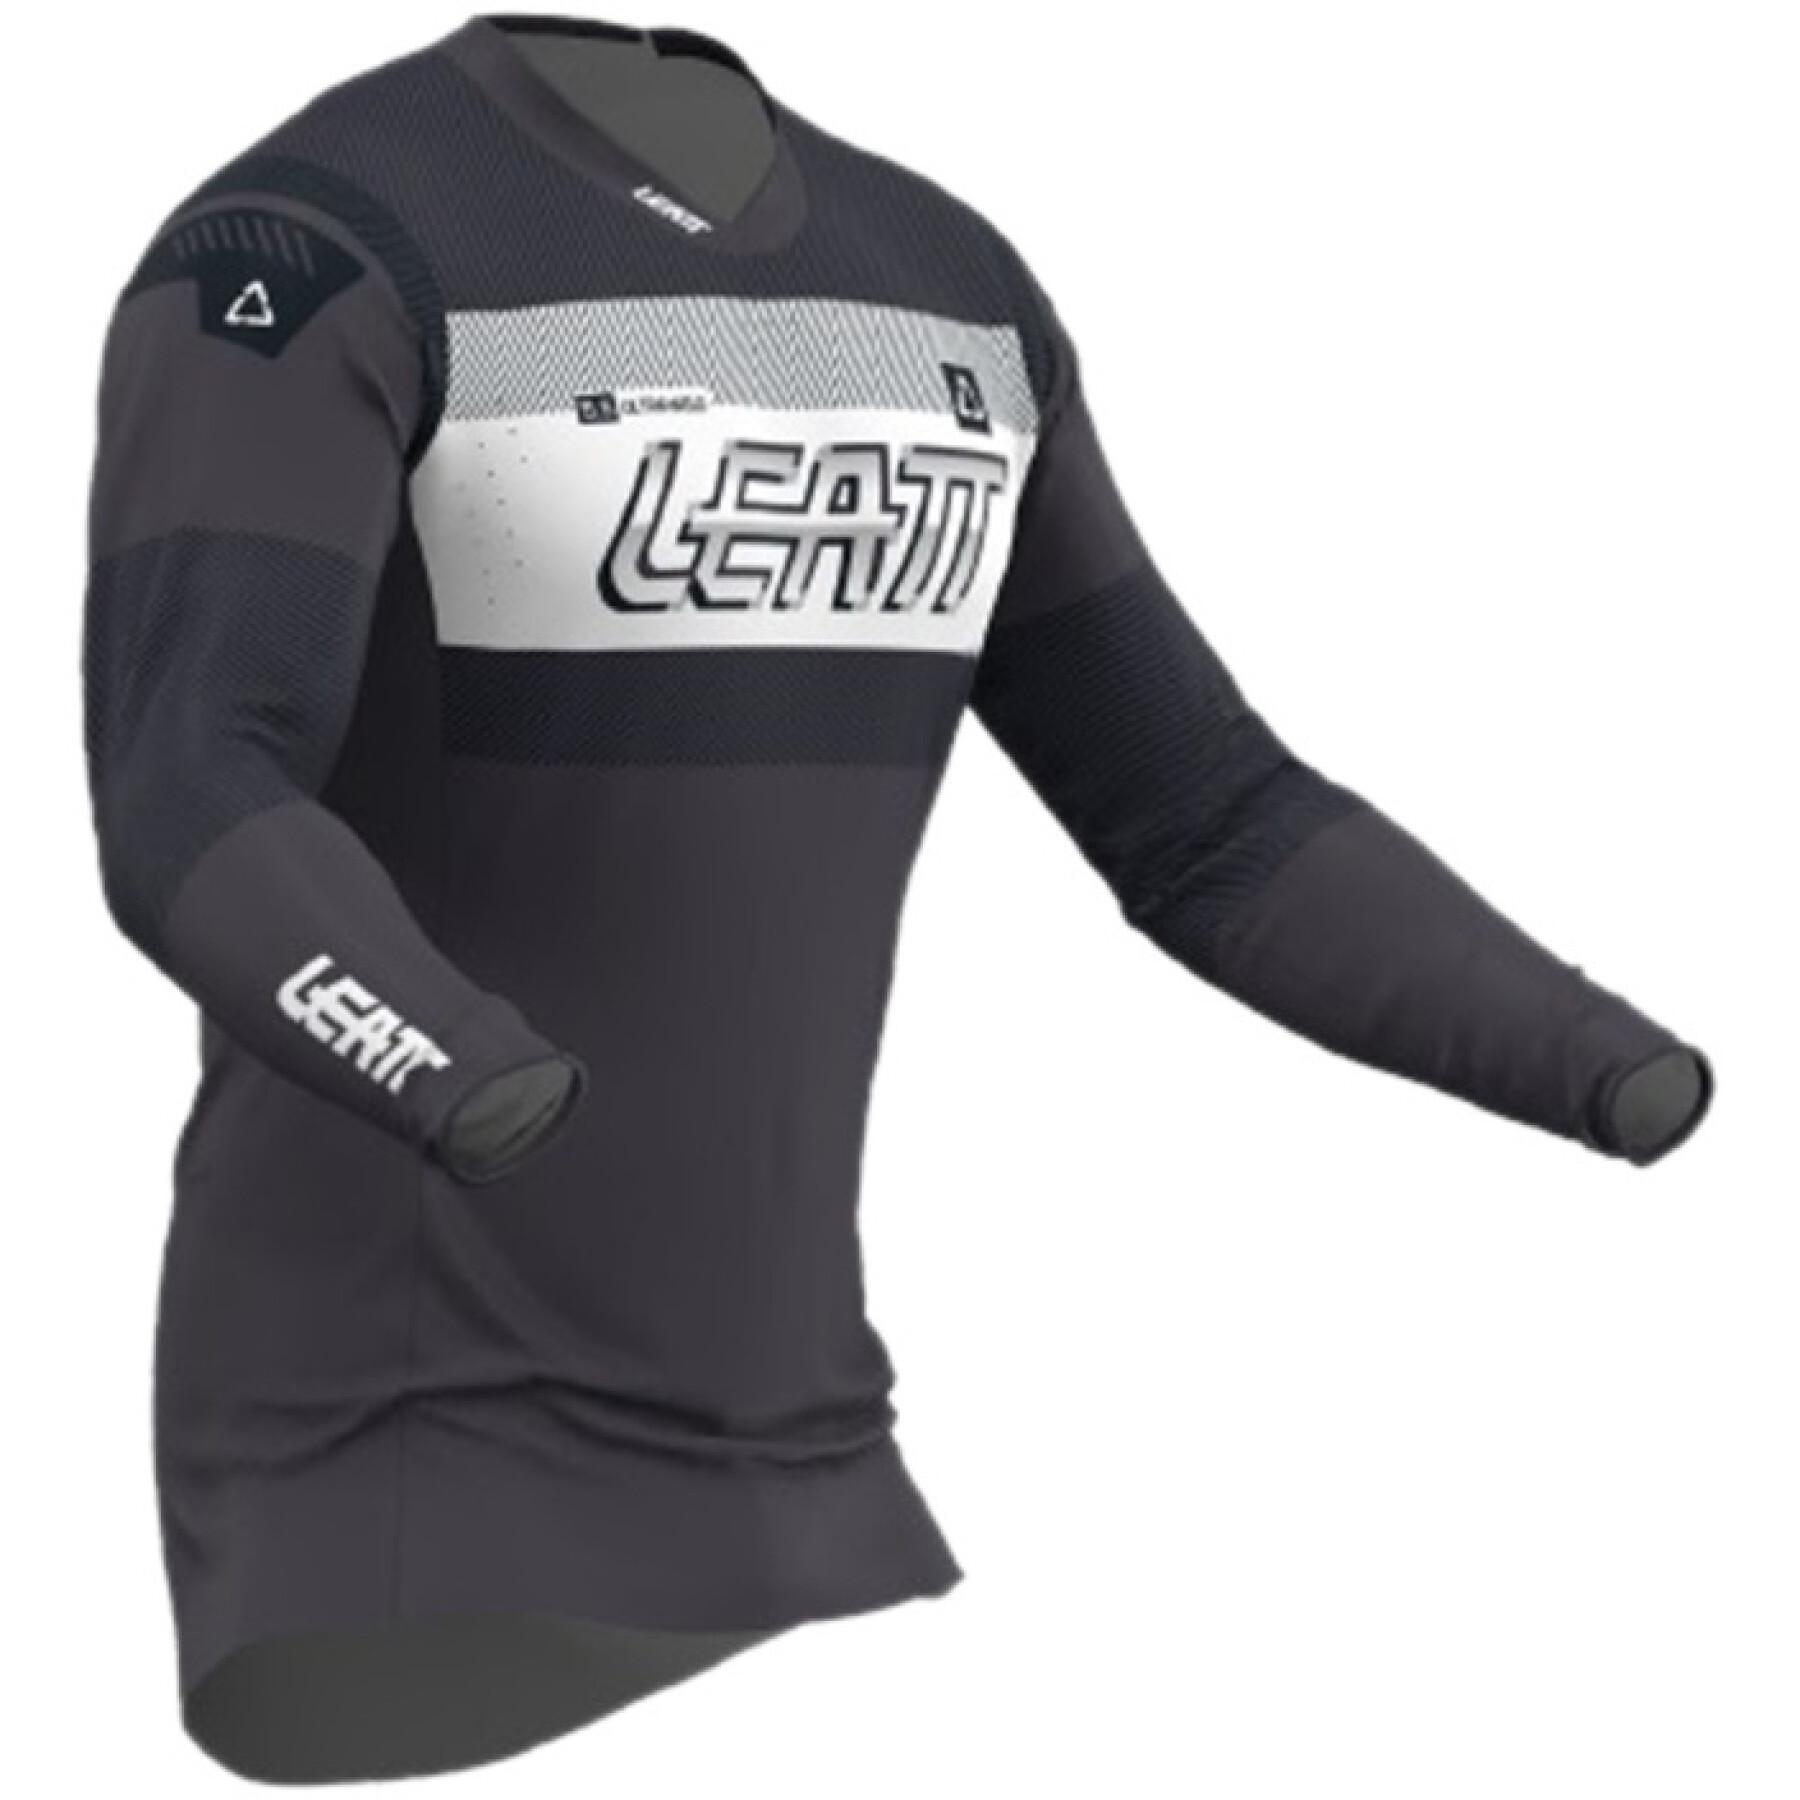 Camiseta moto cross Leatt 5.5 UltraWeld Graphite